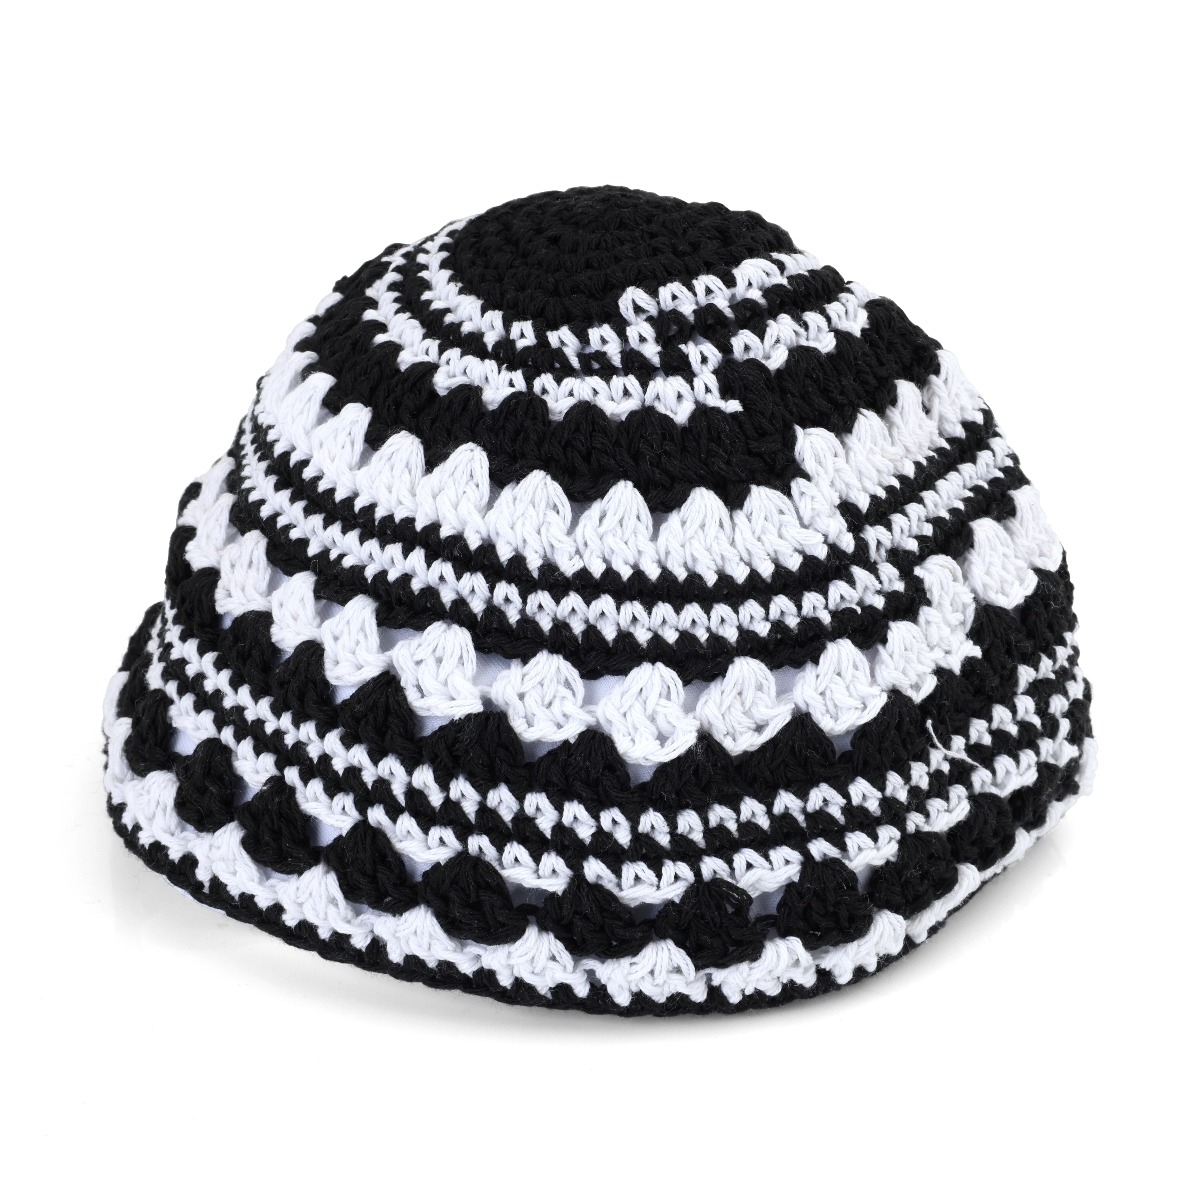 Crocheted Black and White Pattern Frik Kippah  - 1